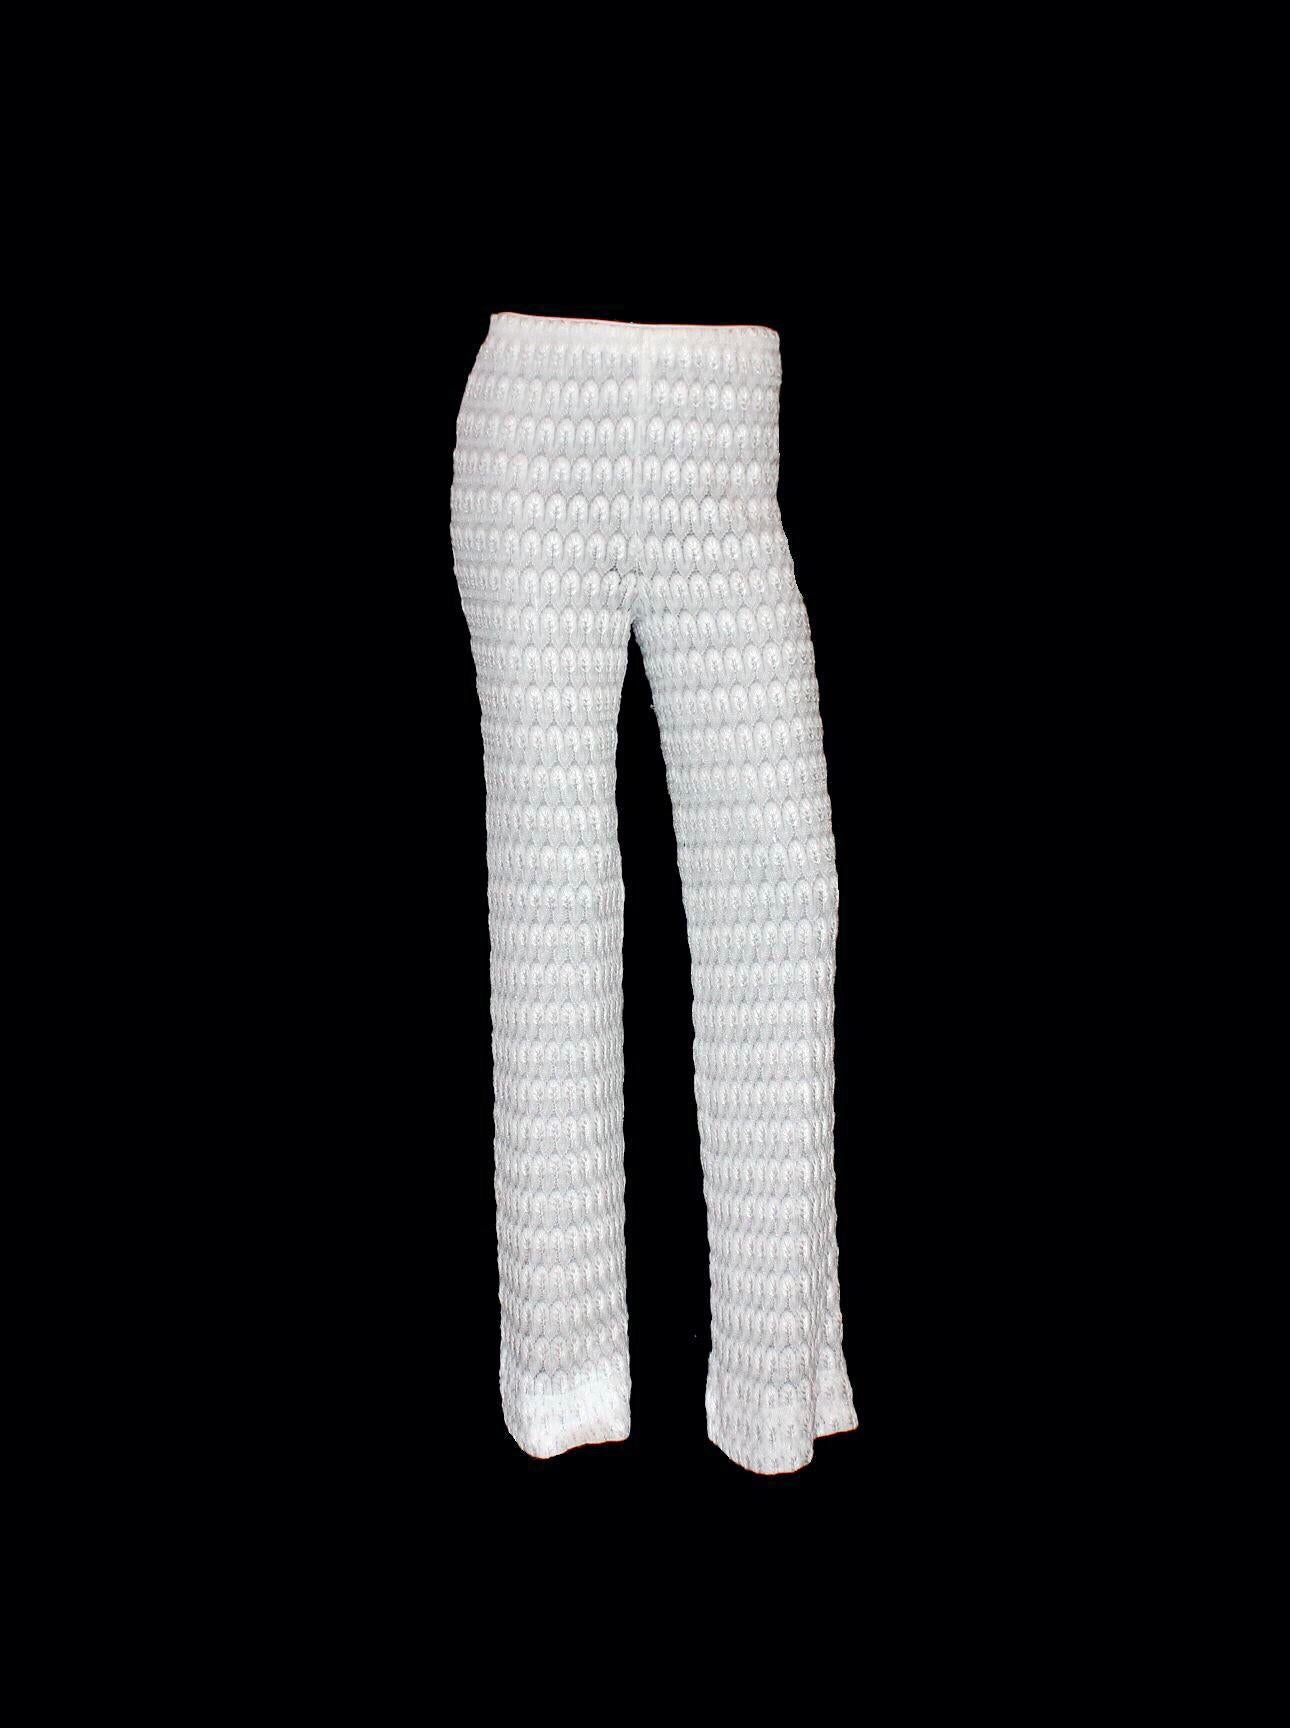 Timeless Pure White Missoni Crochet Knit Palazzo Wide Leg Pants Trousers